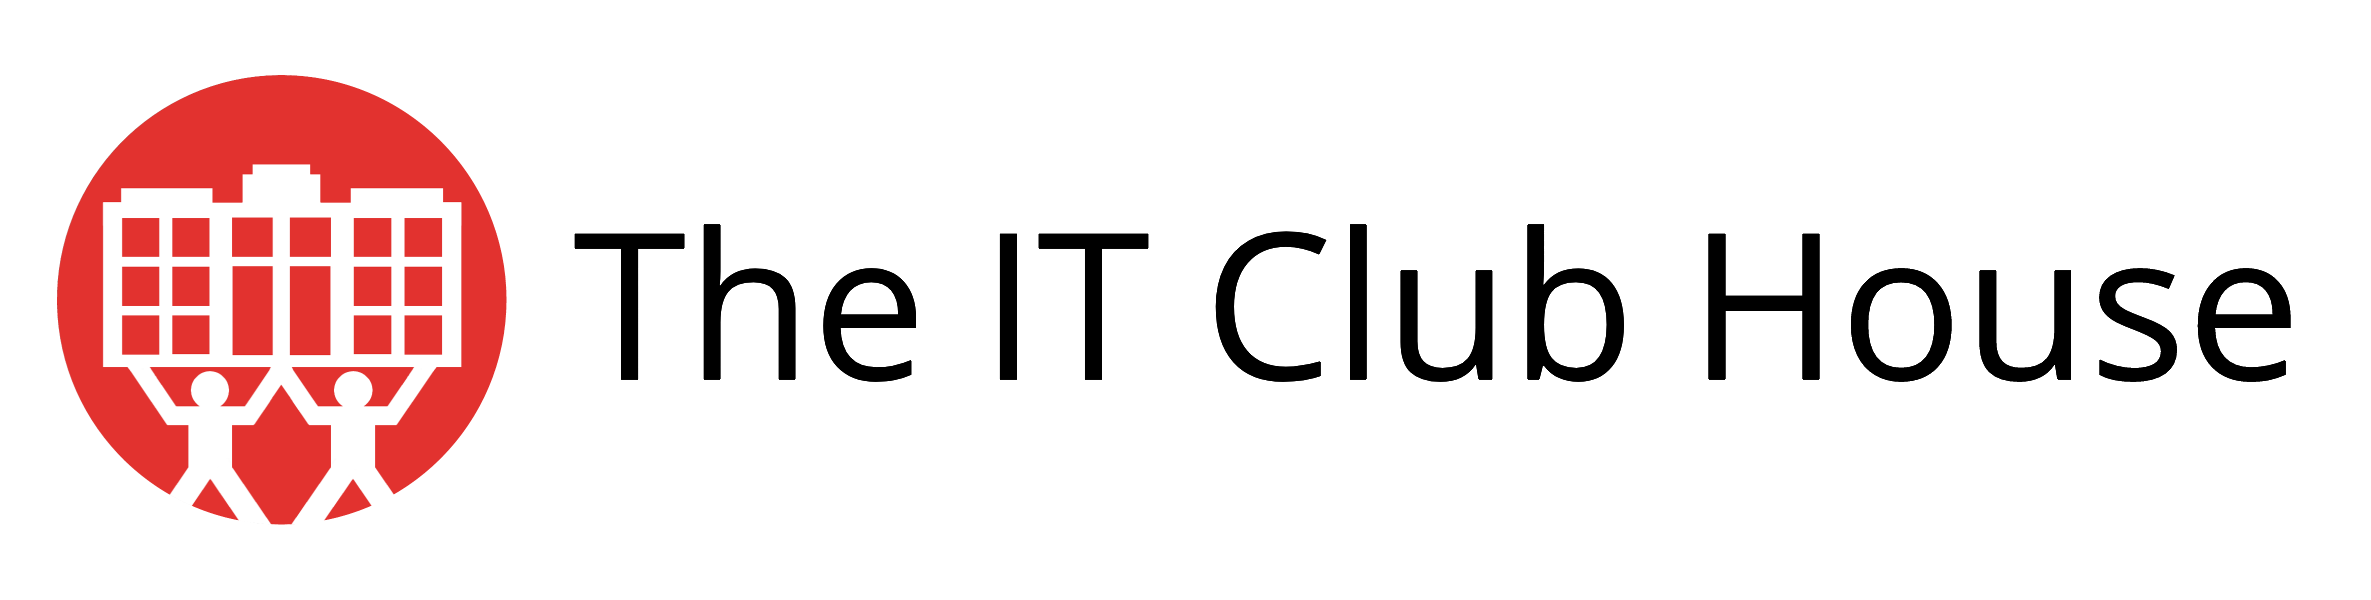 The IT Club House Logo